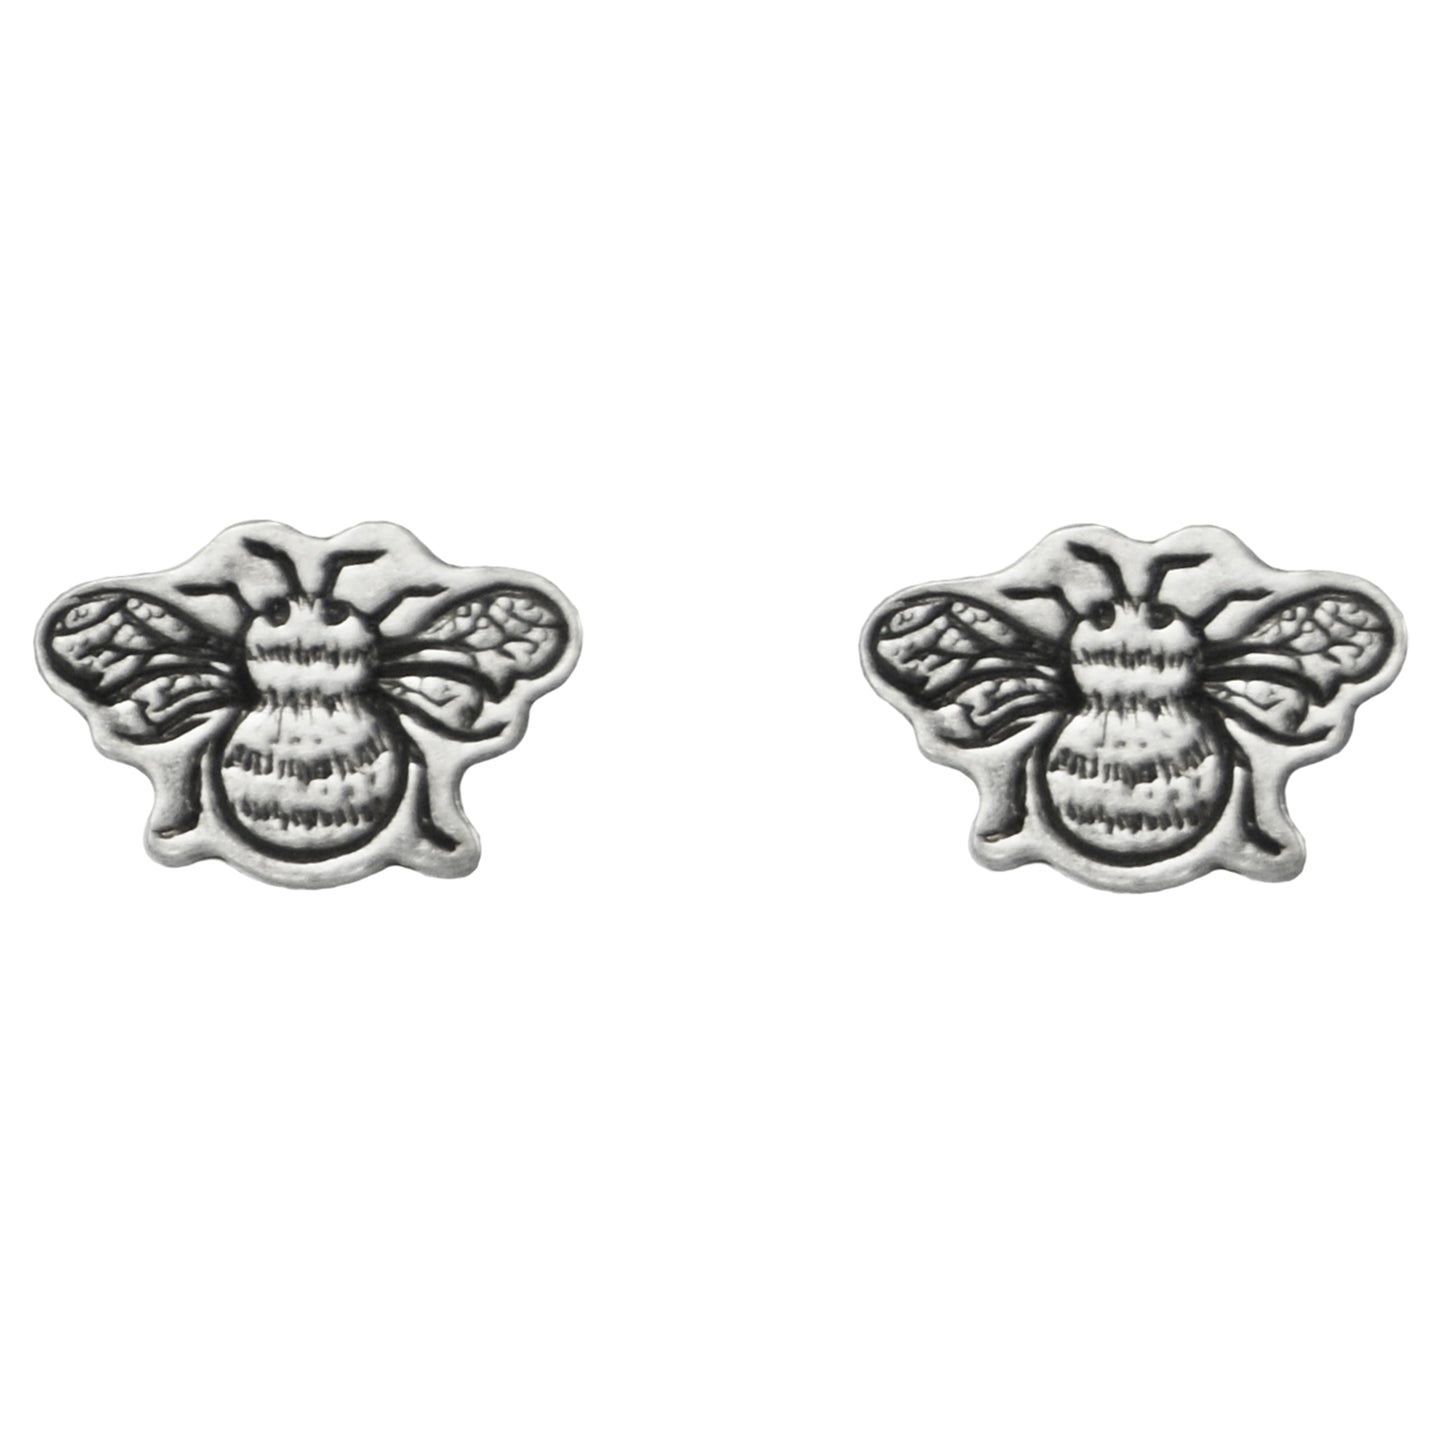 The Bumblebee Maiden earrings